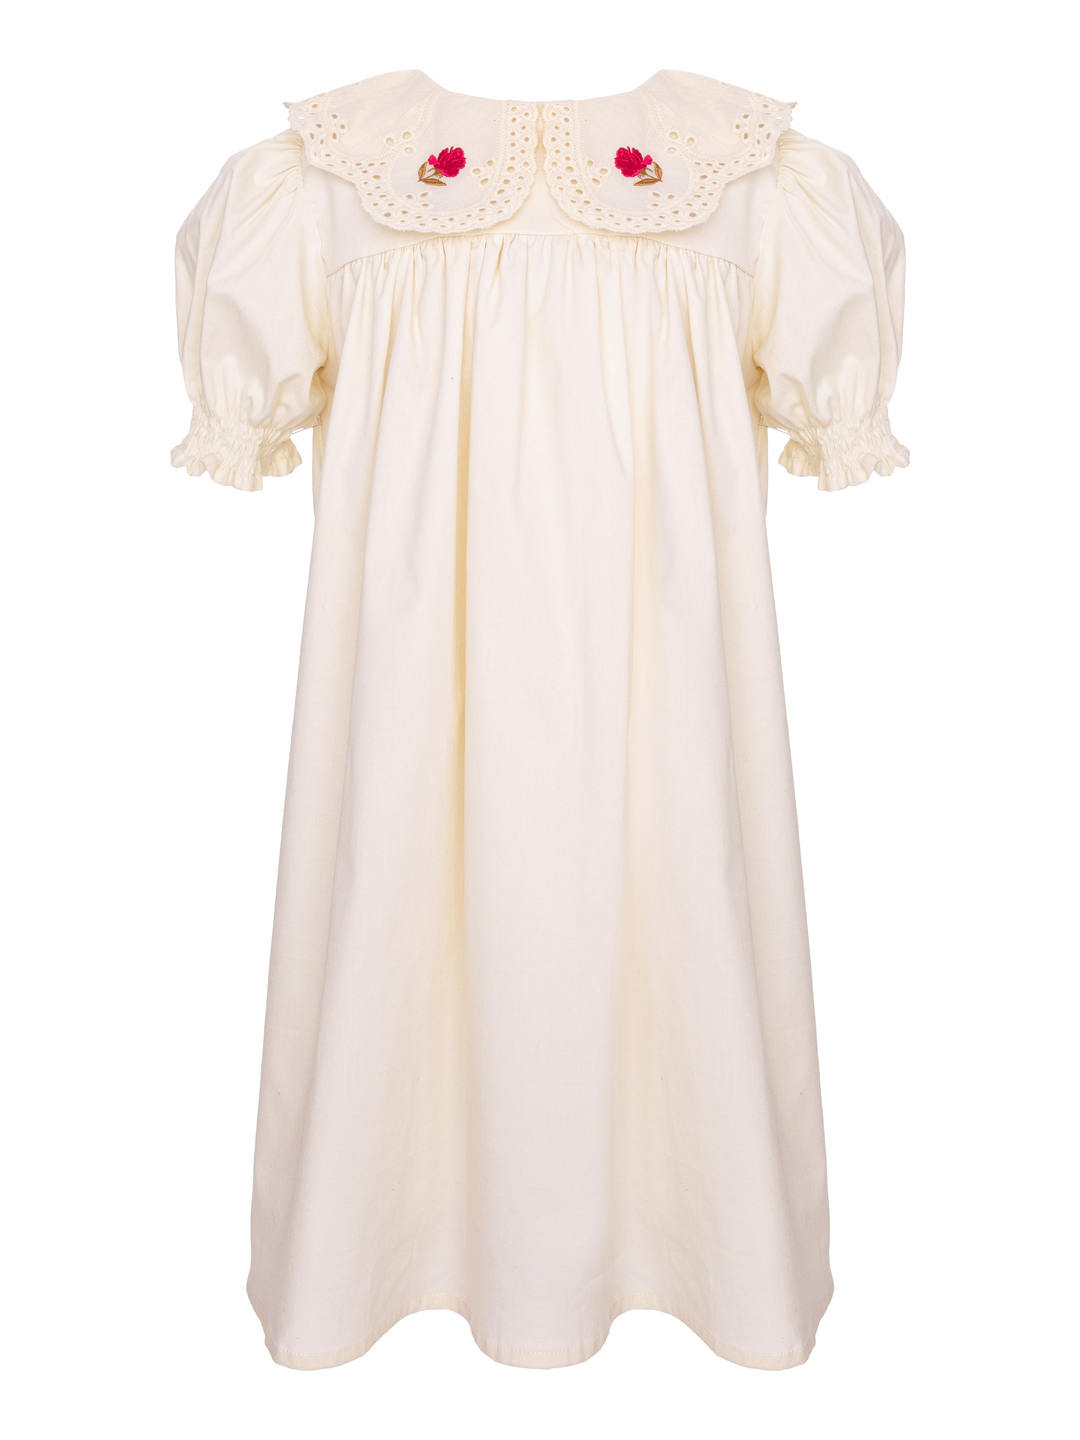 JASMINE DRESS-BEIGE WITH ROSE EMBROIDERED COLLAR